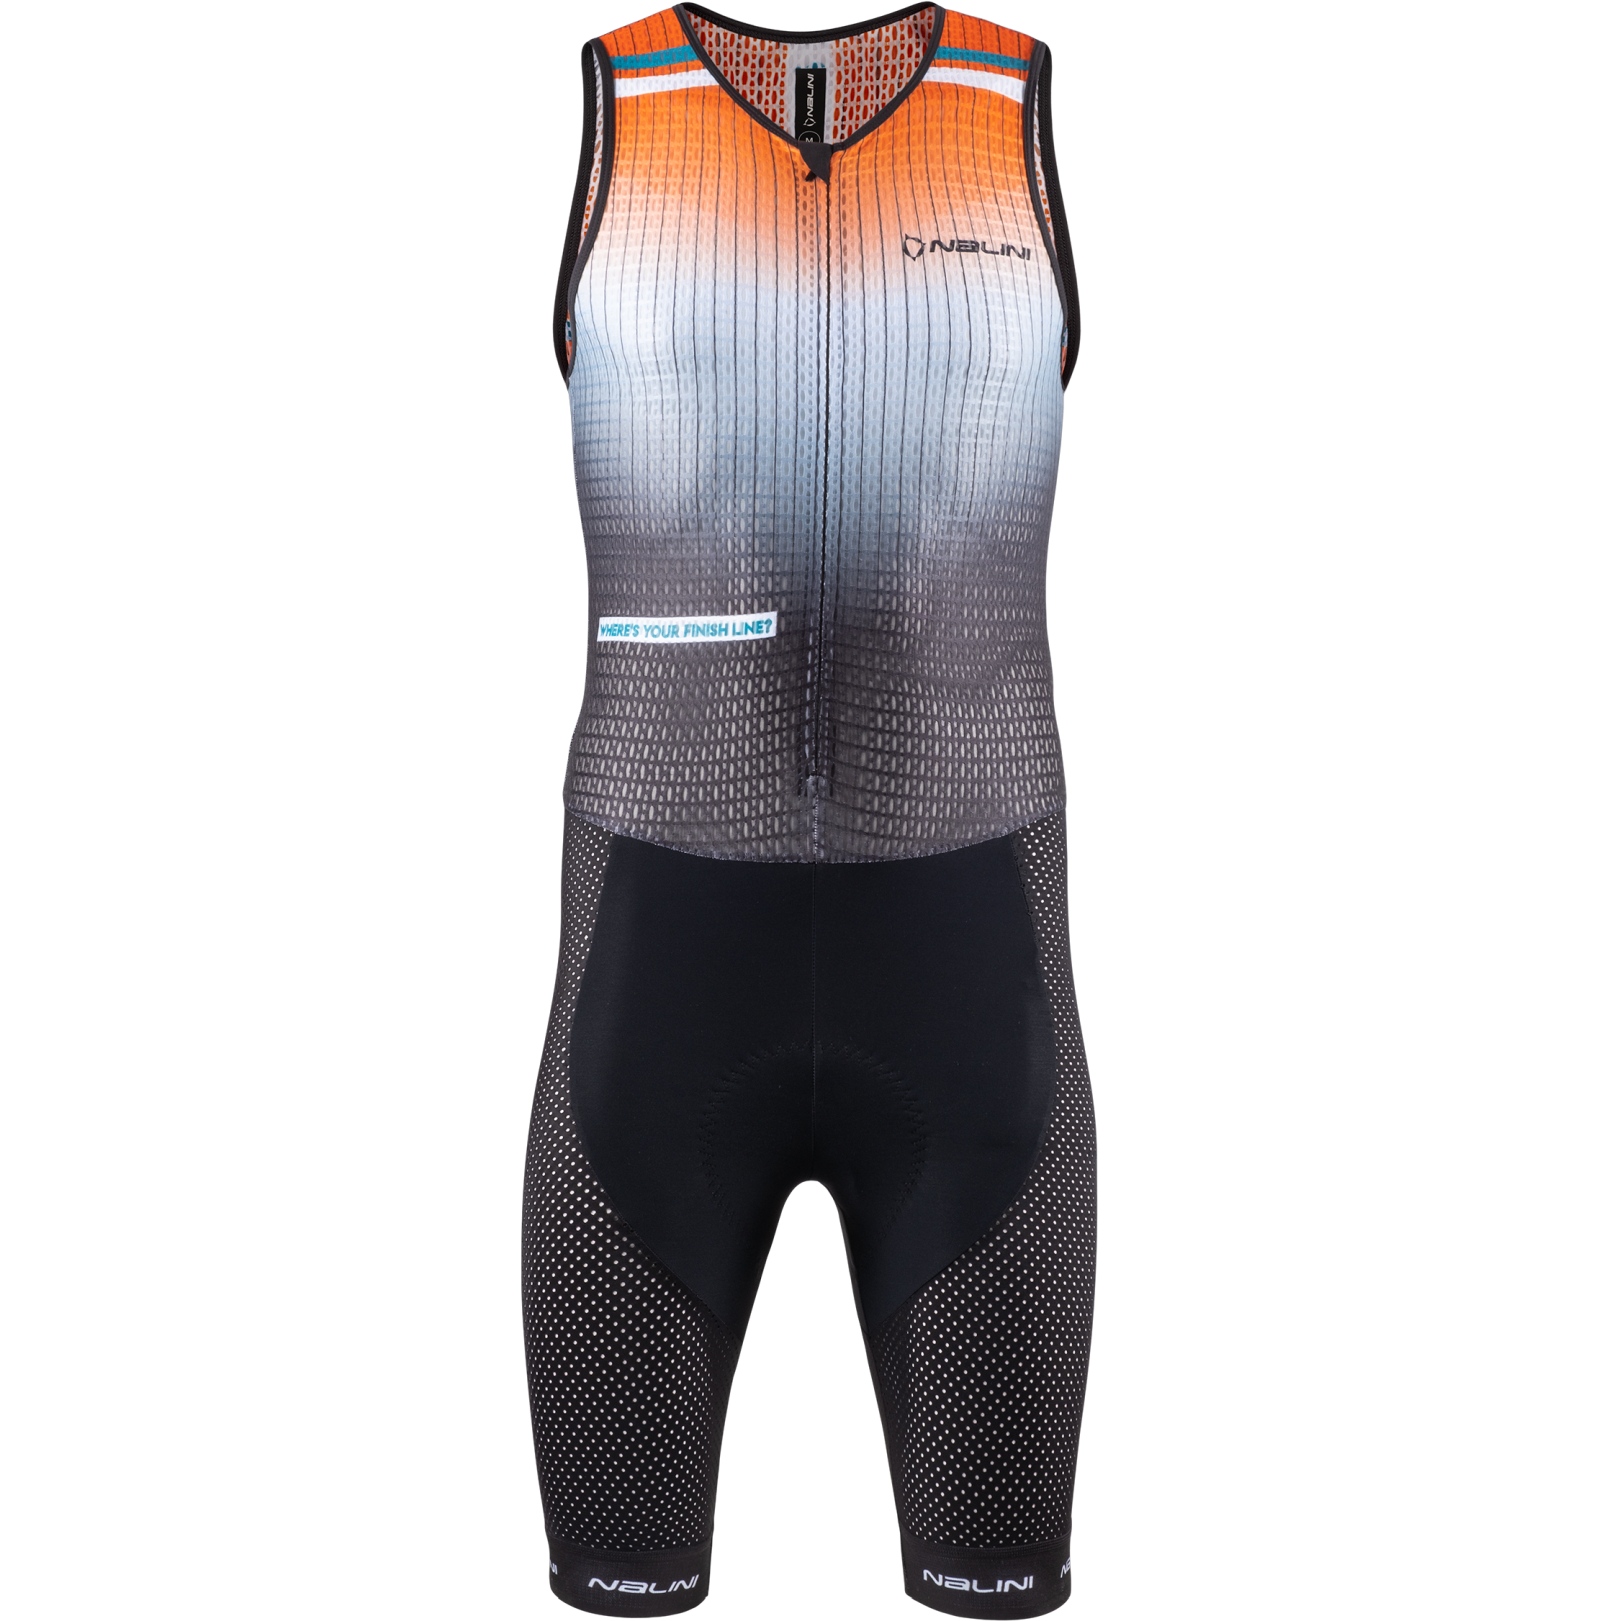 Produktbild von Nalini New Indoor Race Suit - schwarz/orange 4000